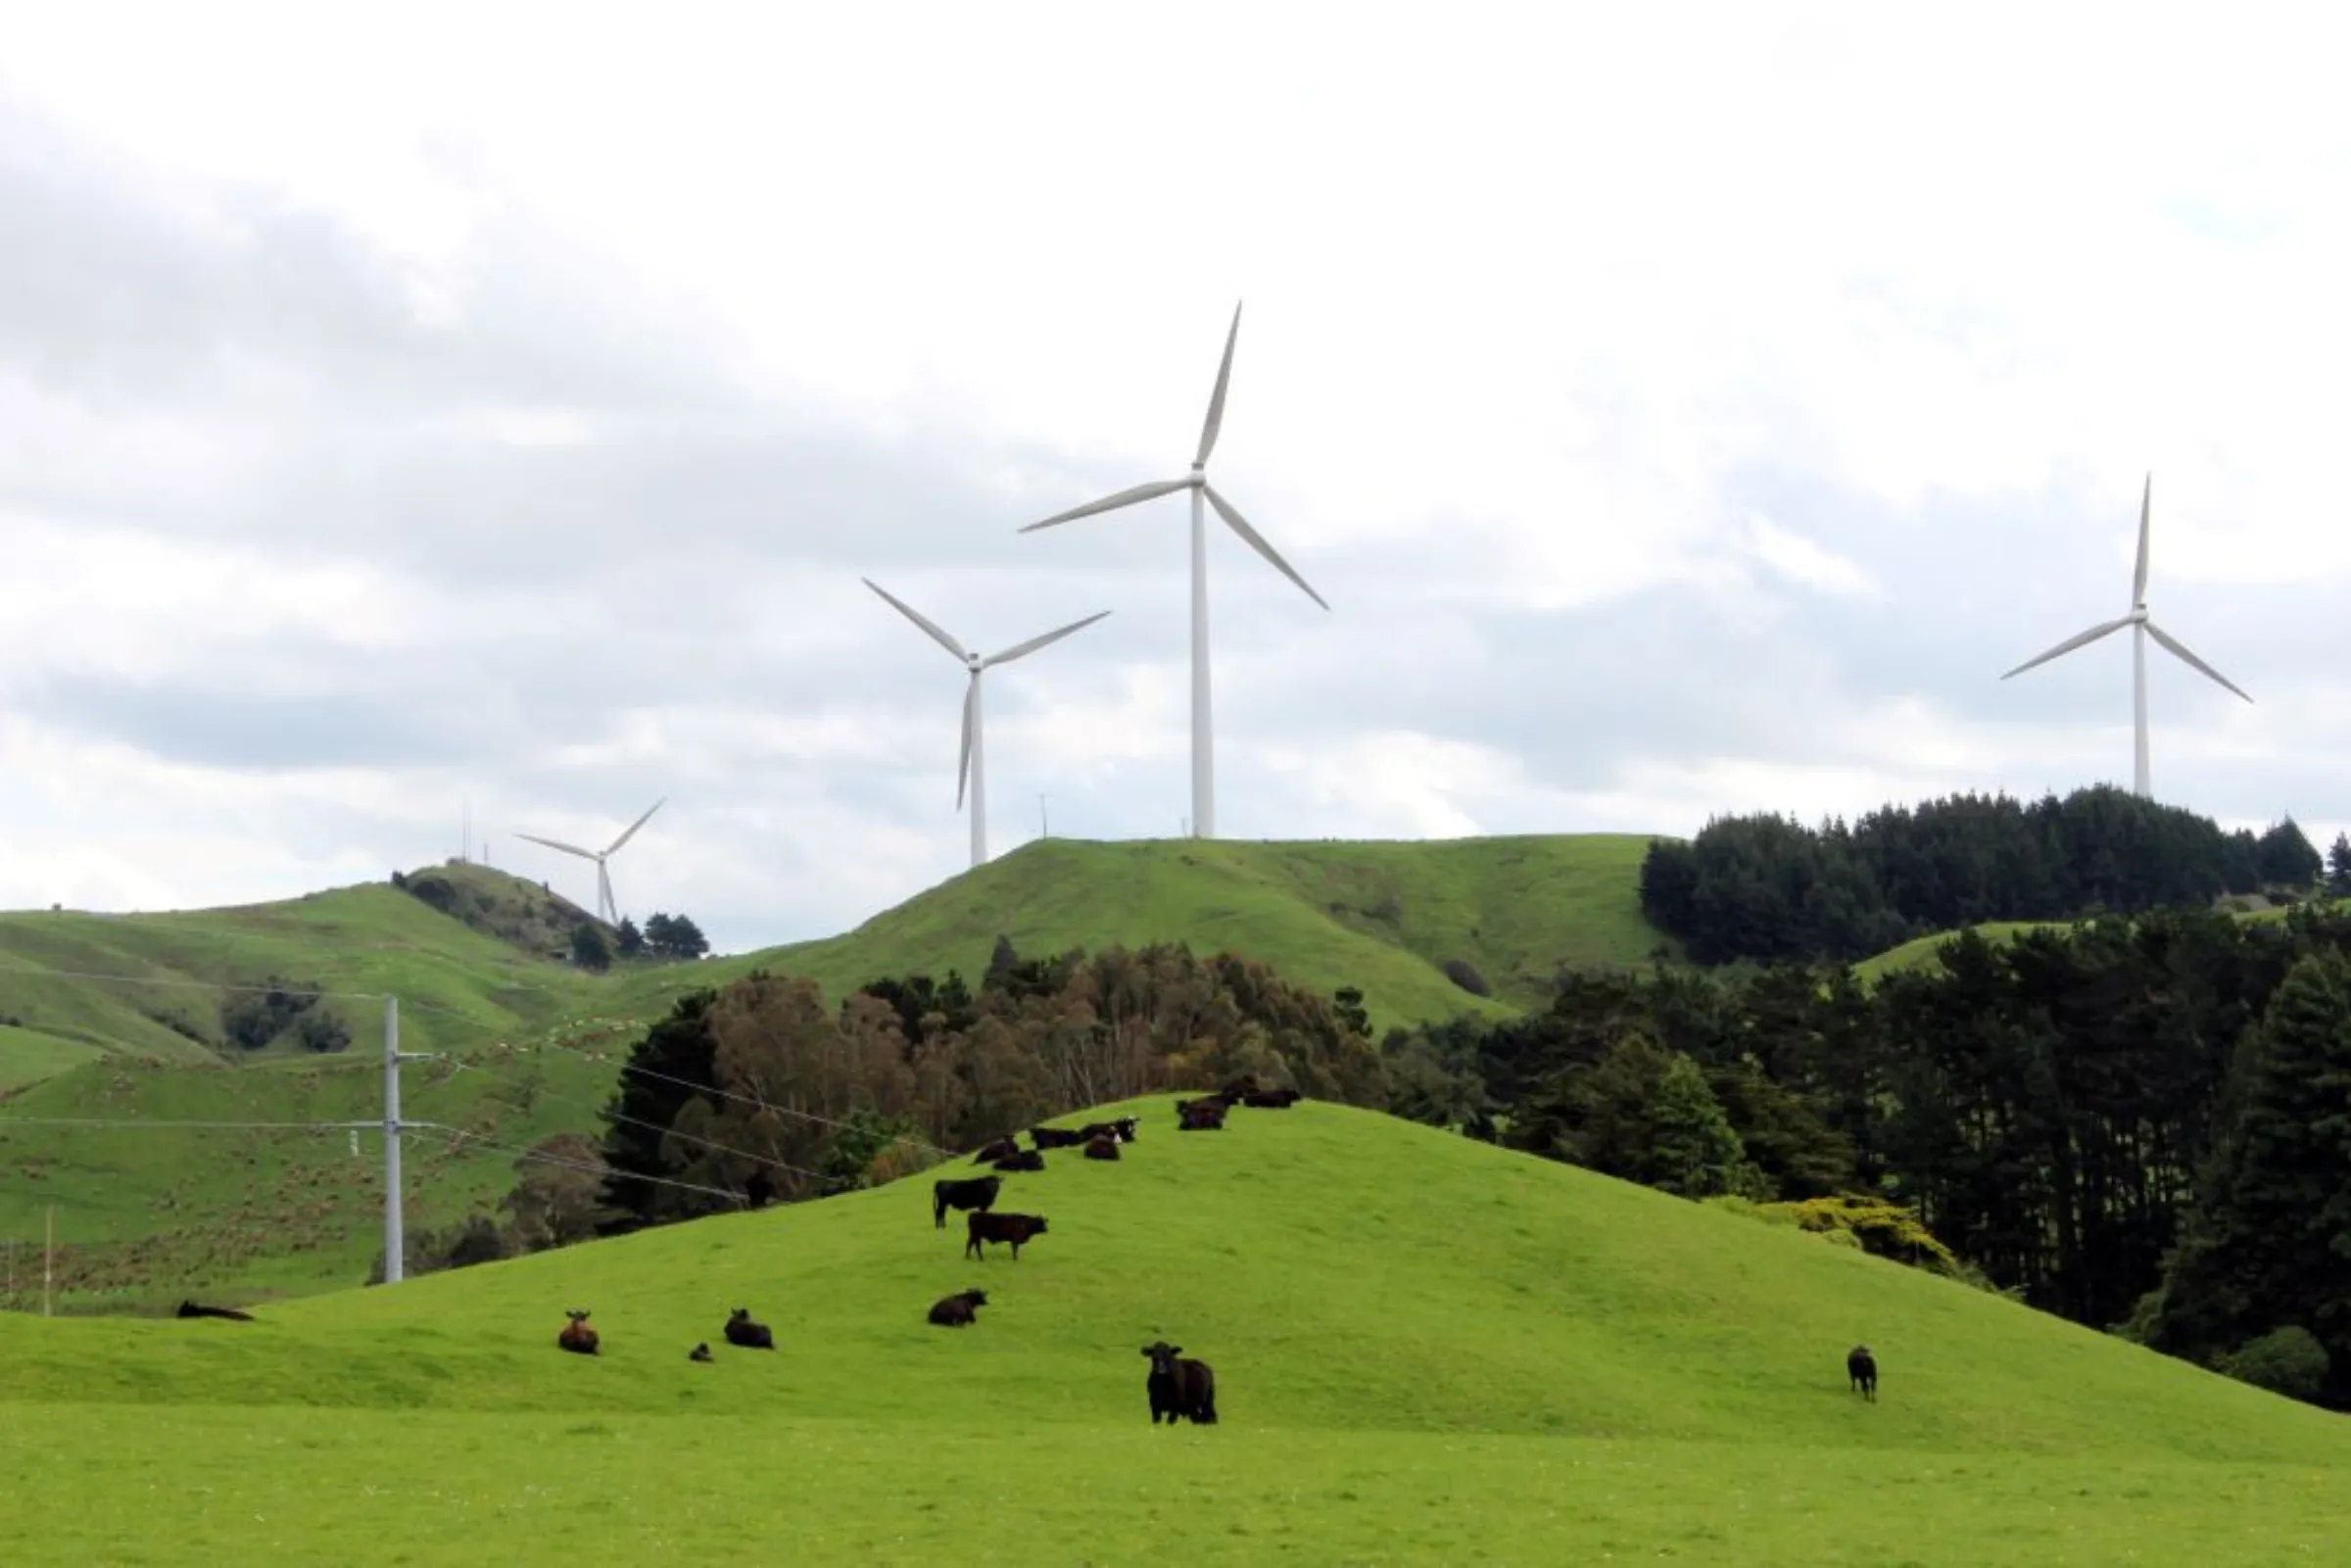 Cows graze near wind farms on the east coast region of Hawke's Bay, New Zealand October 30, 2020.